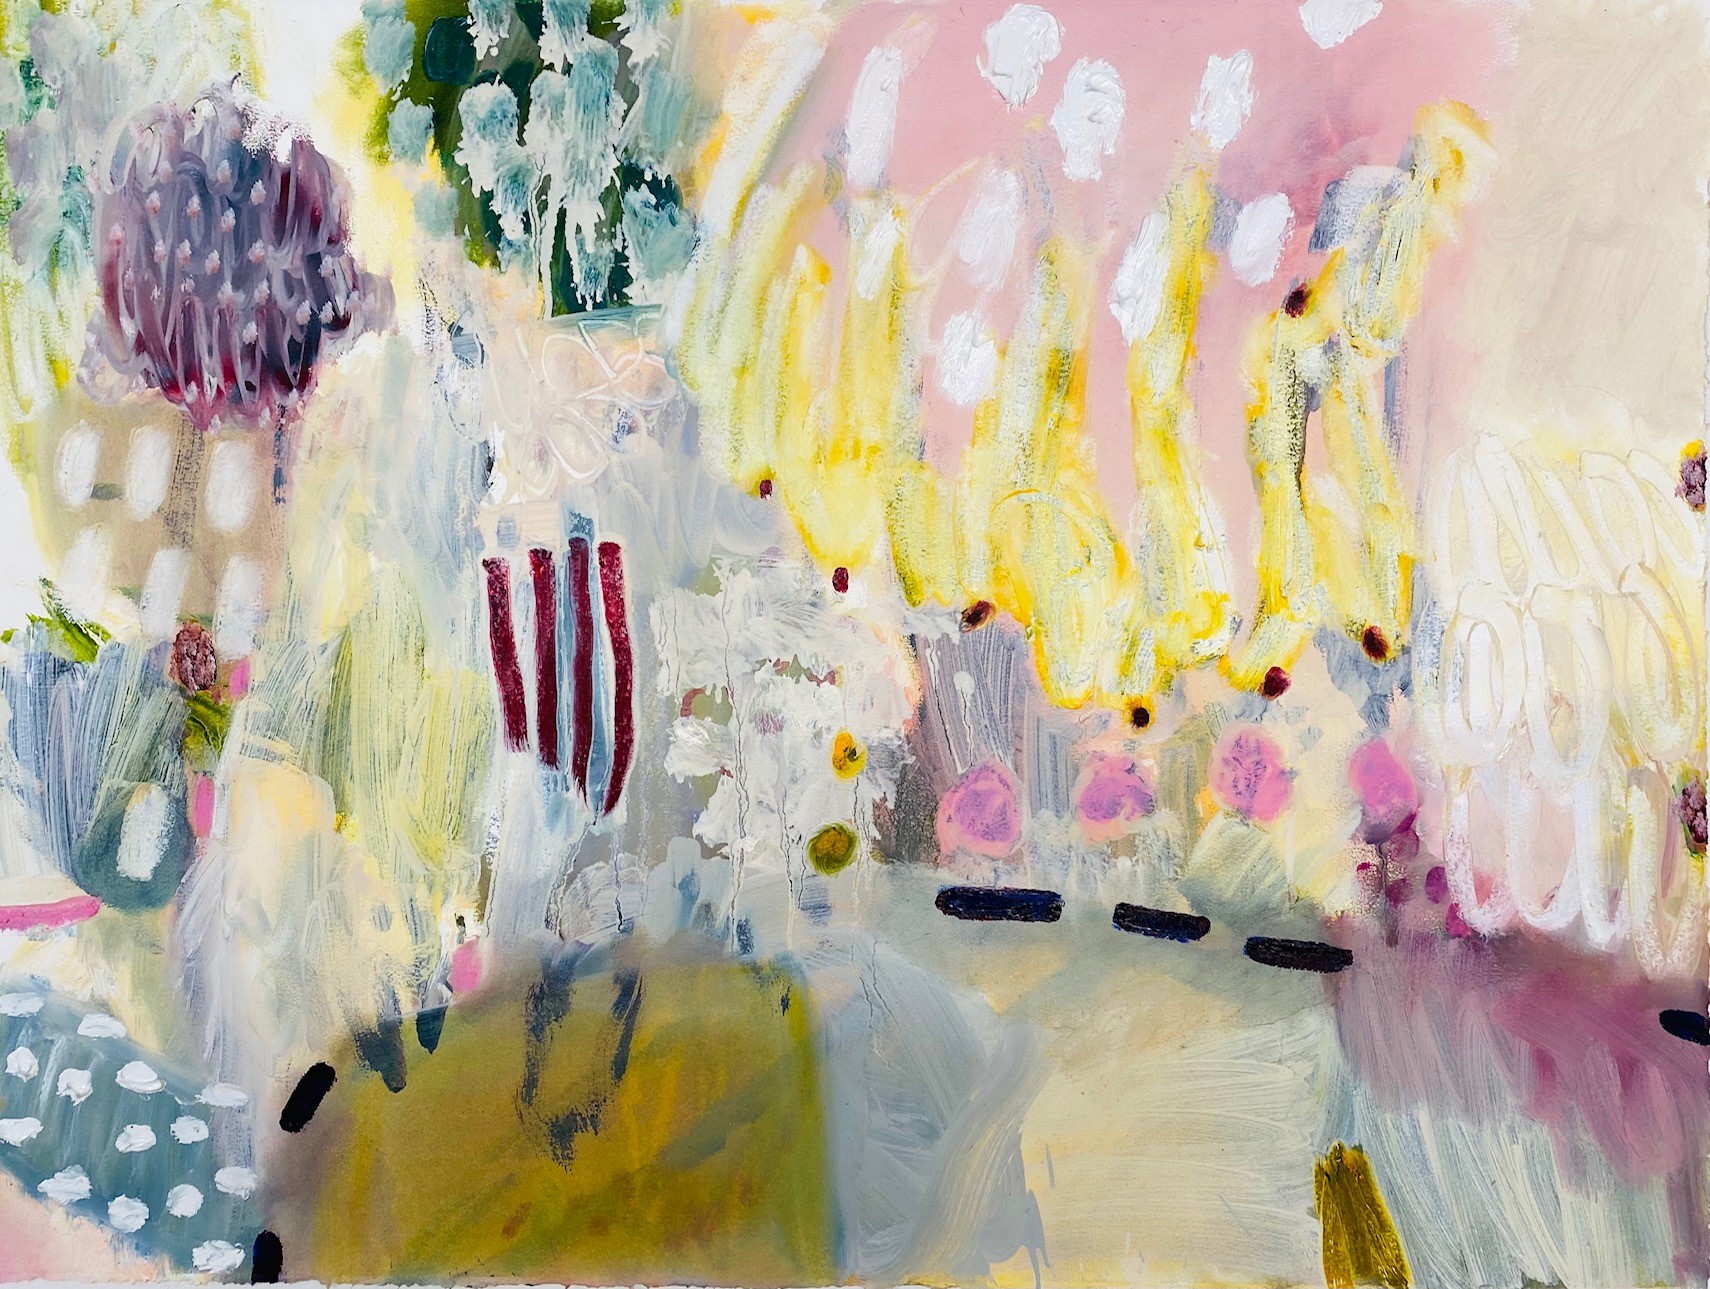 'Pink Lemonade', Liz Crossfield, Oil on paper, 56 x 76 cm